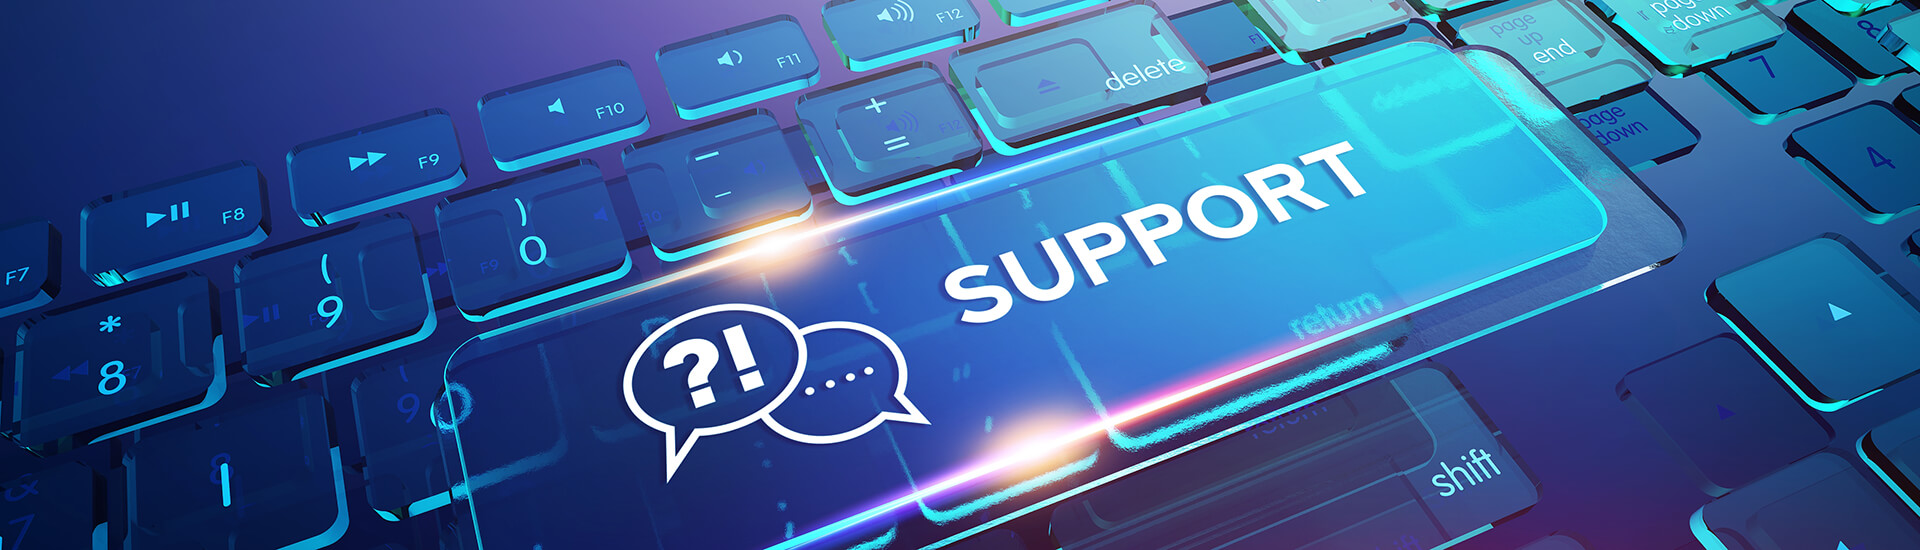 IT Service - Vendor Software Support - 1